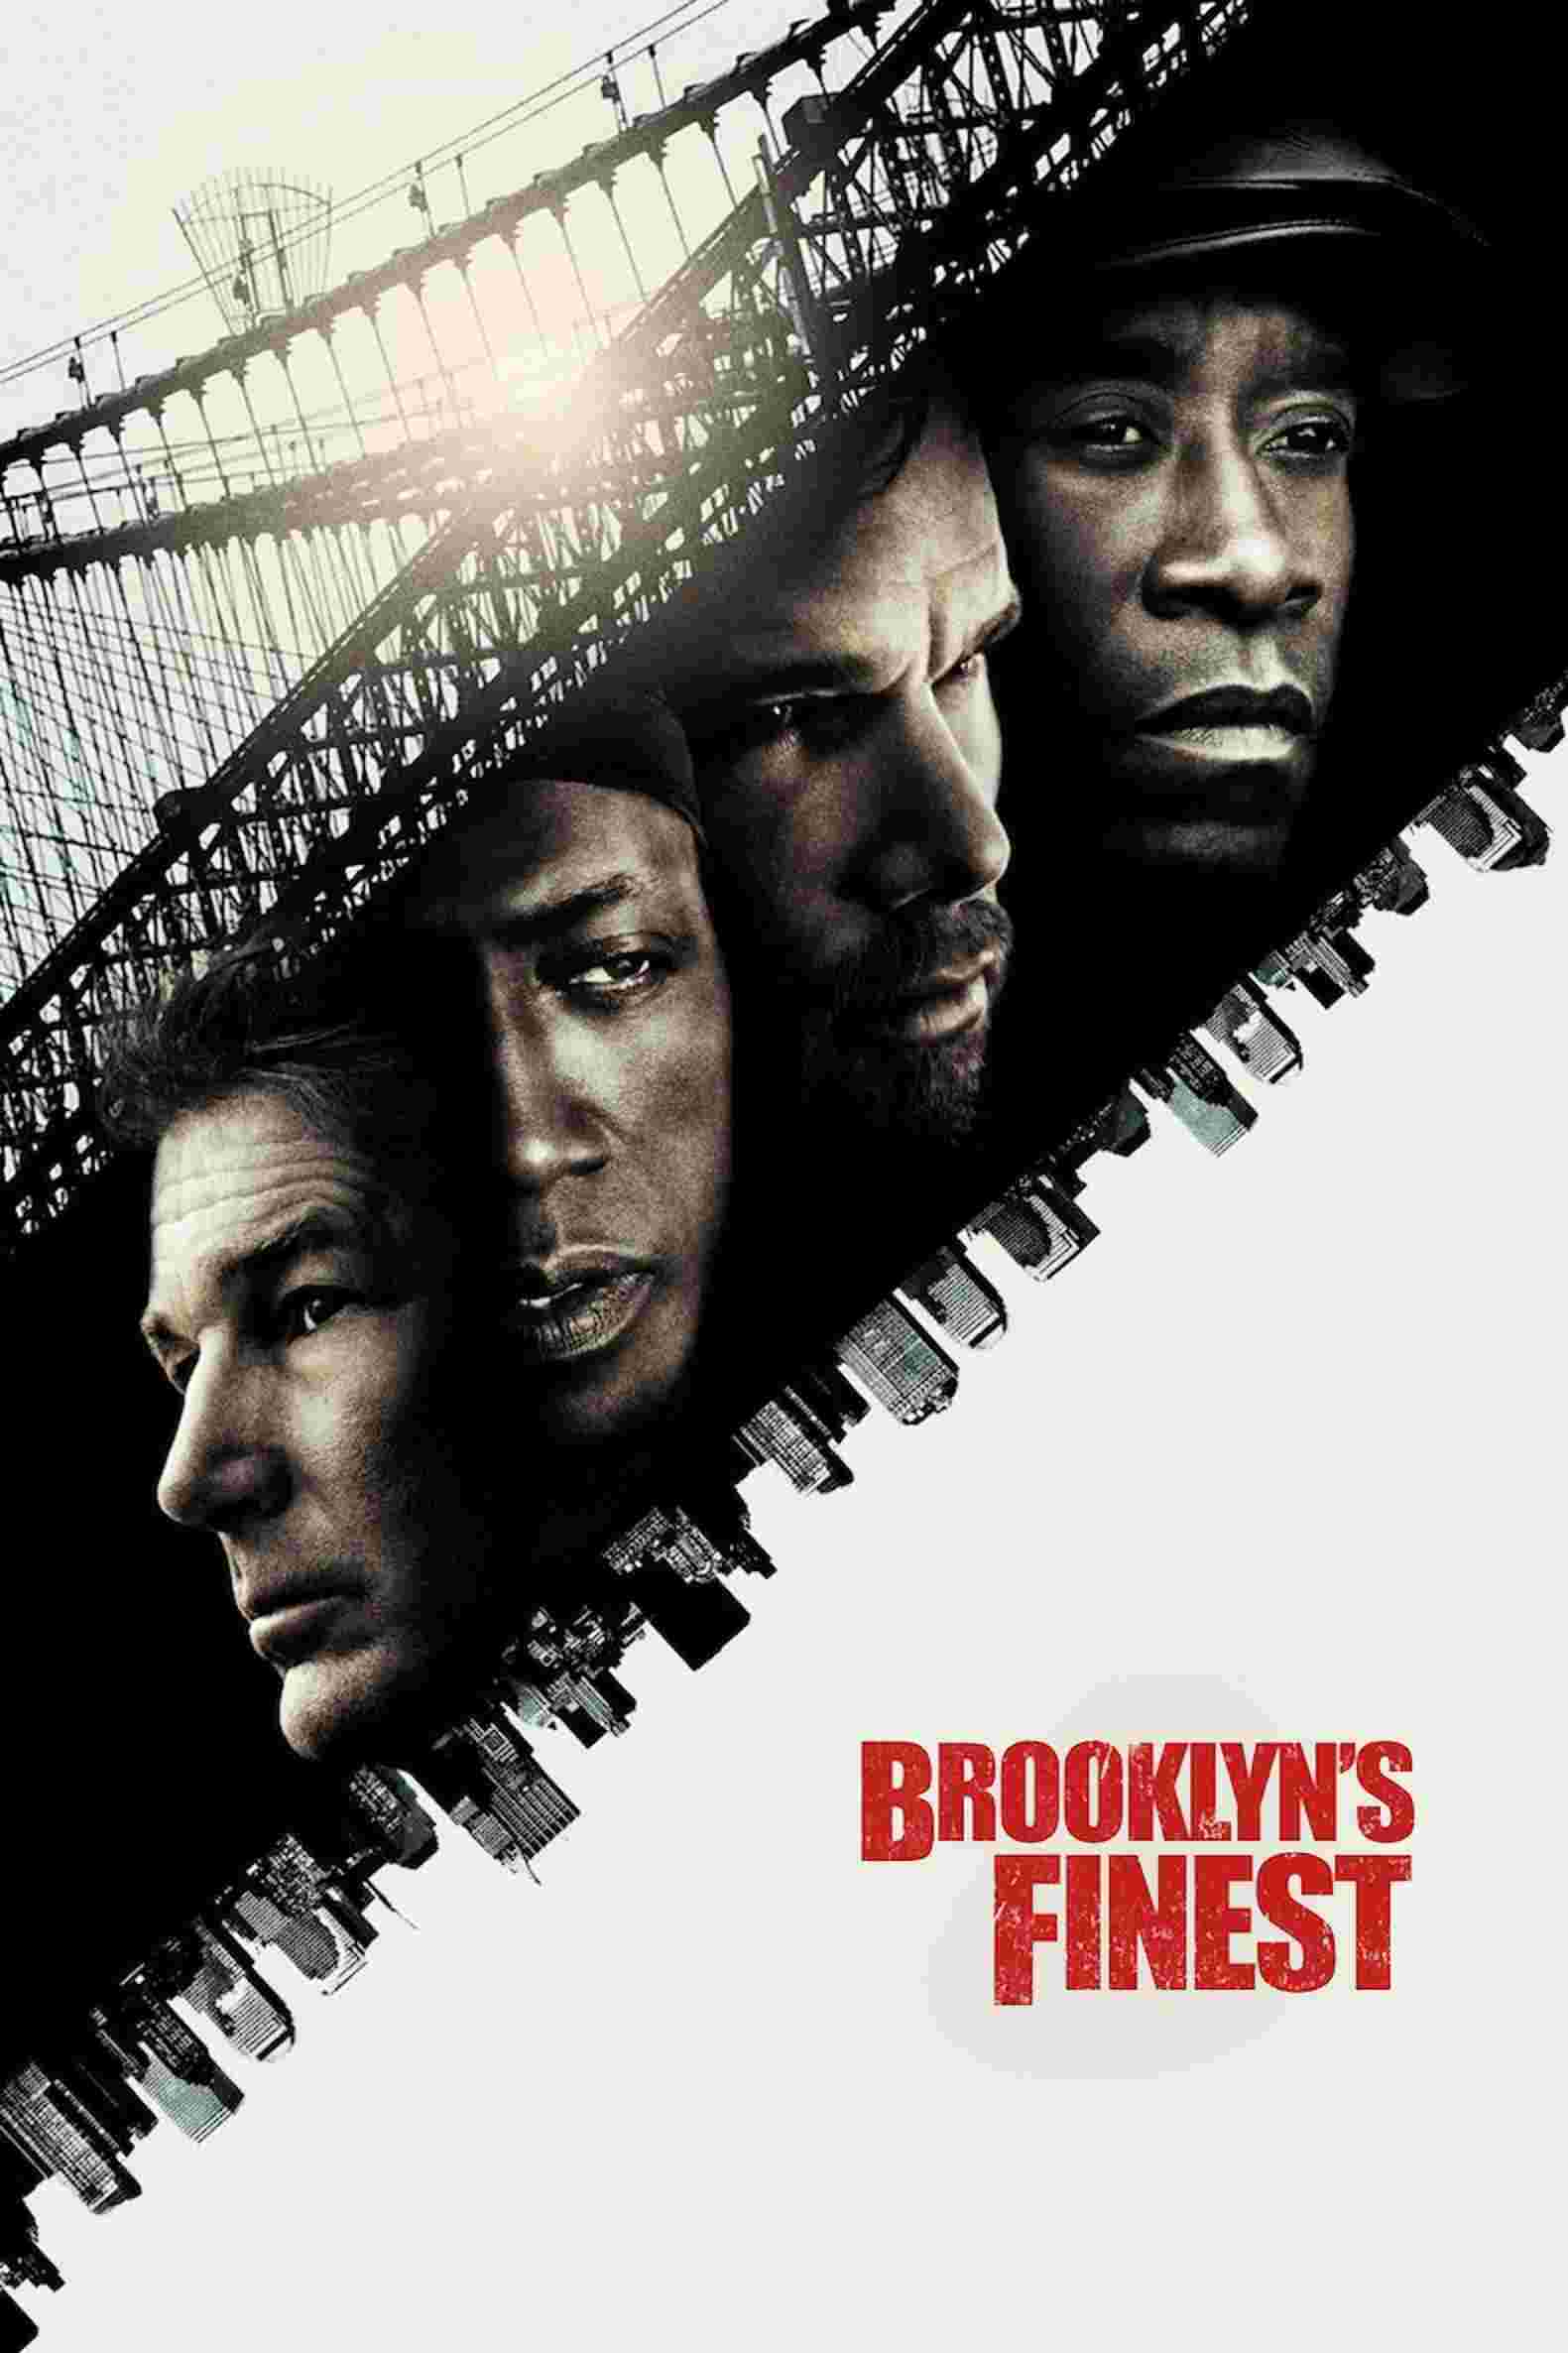 Brooklyn's Finest (2009) Richard Gere